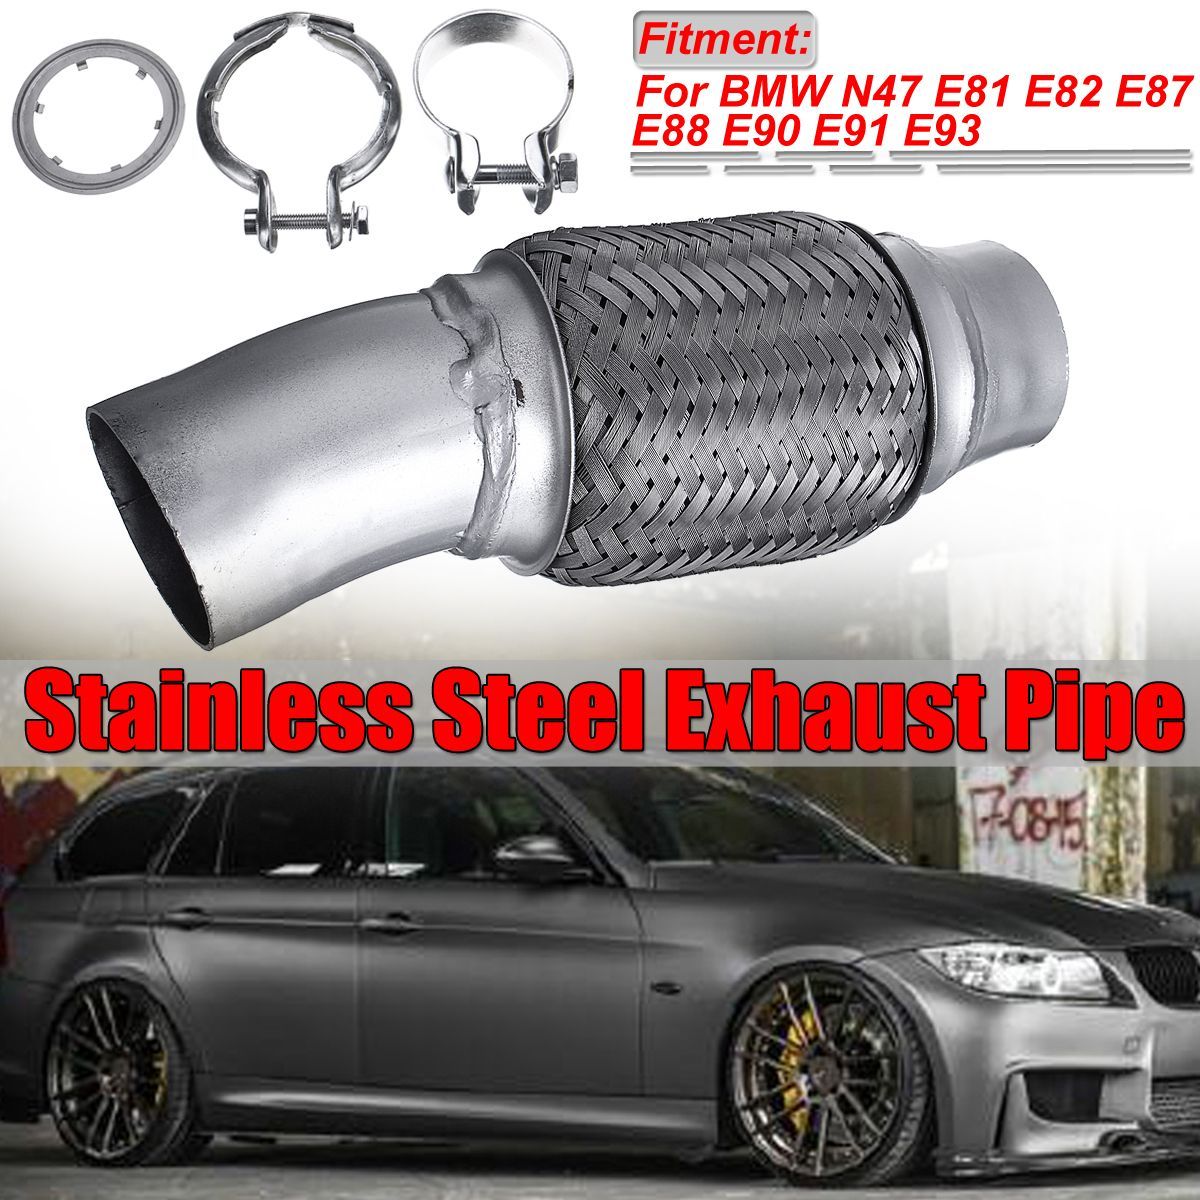 Stainless-Steel-Exhaust-Muffler-Pipe-Kits-For-BMW-N47-E81-E82-E87-E88-E90-E91-E93-1561497